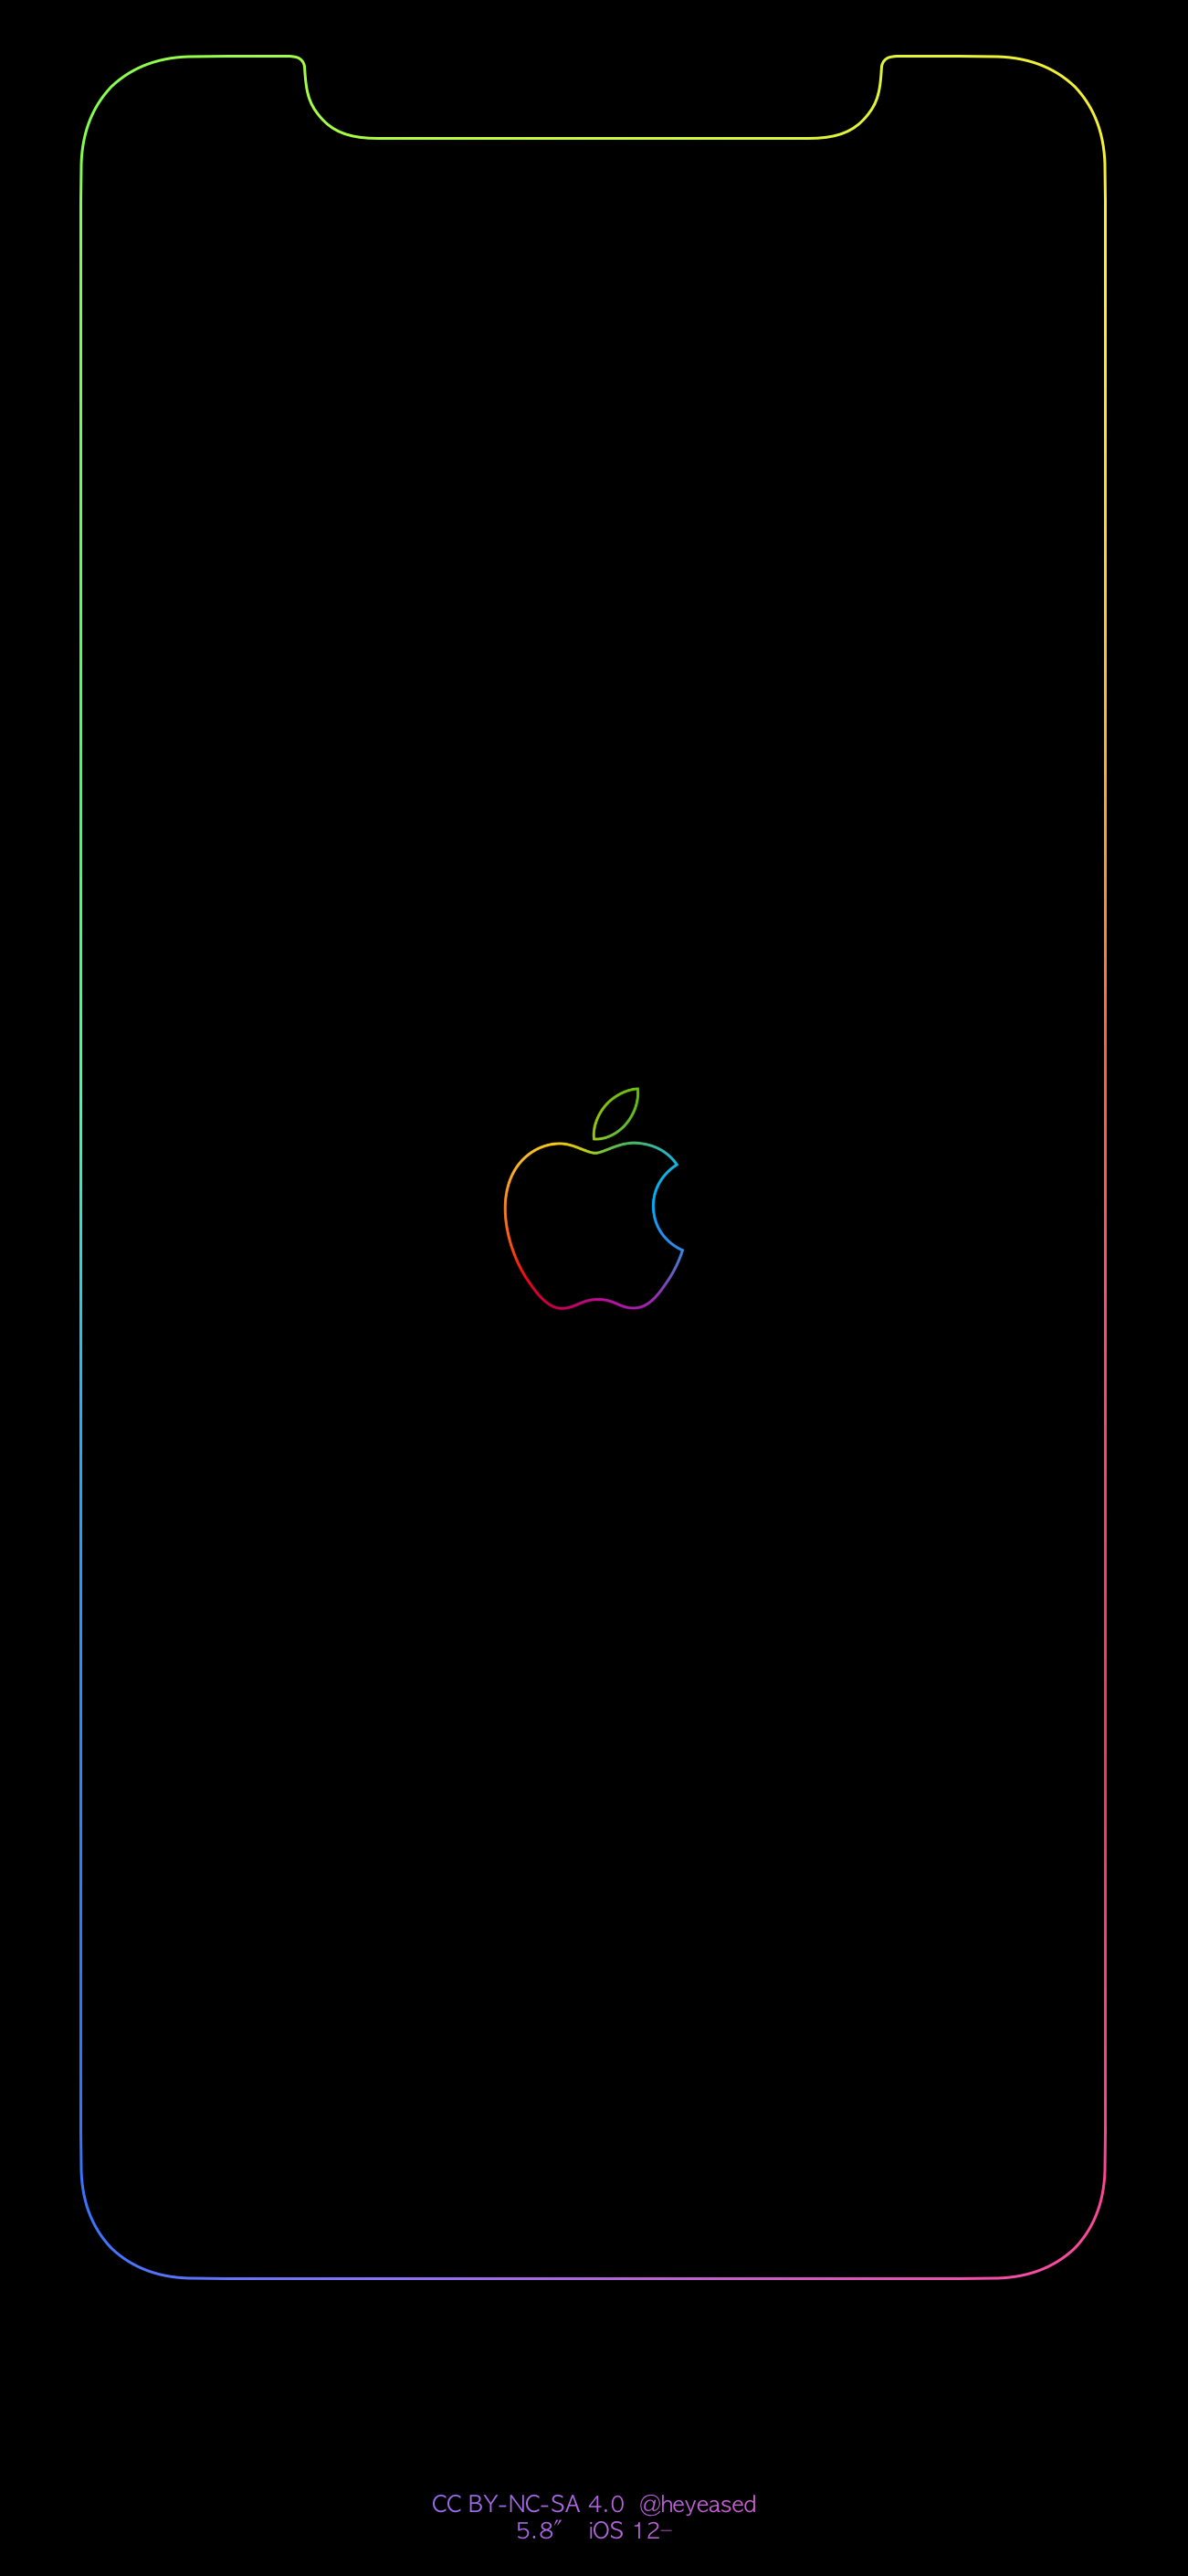 Cool Apple Logos Wallpaper